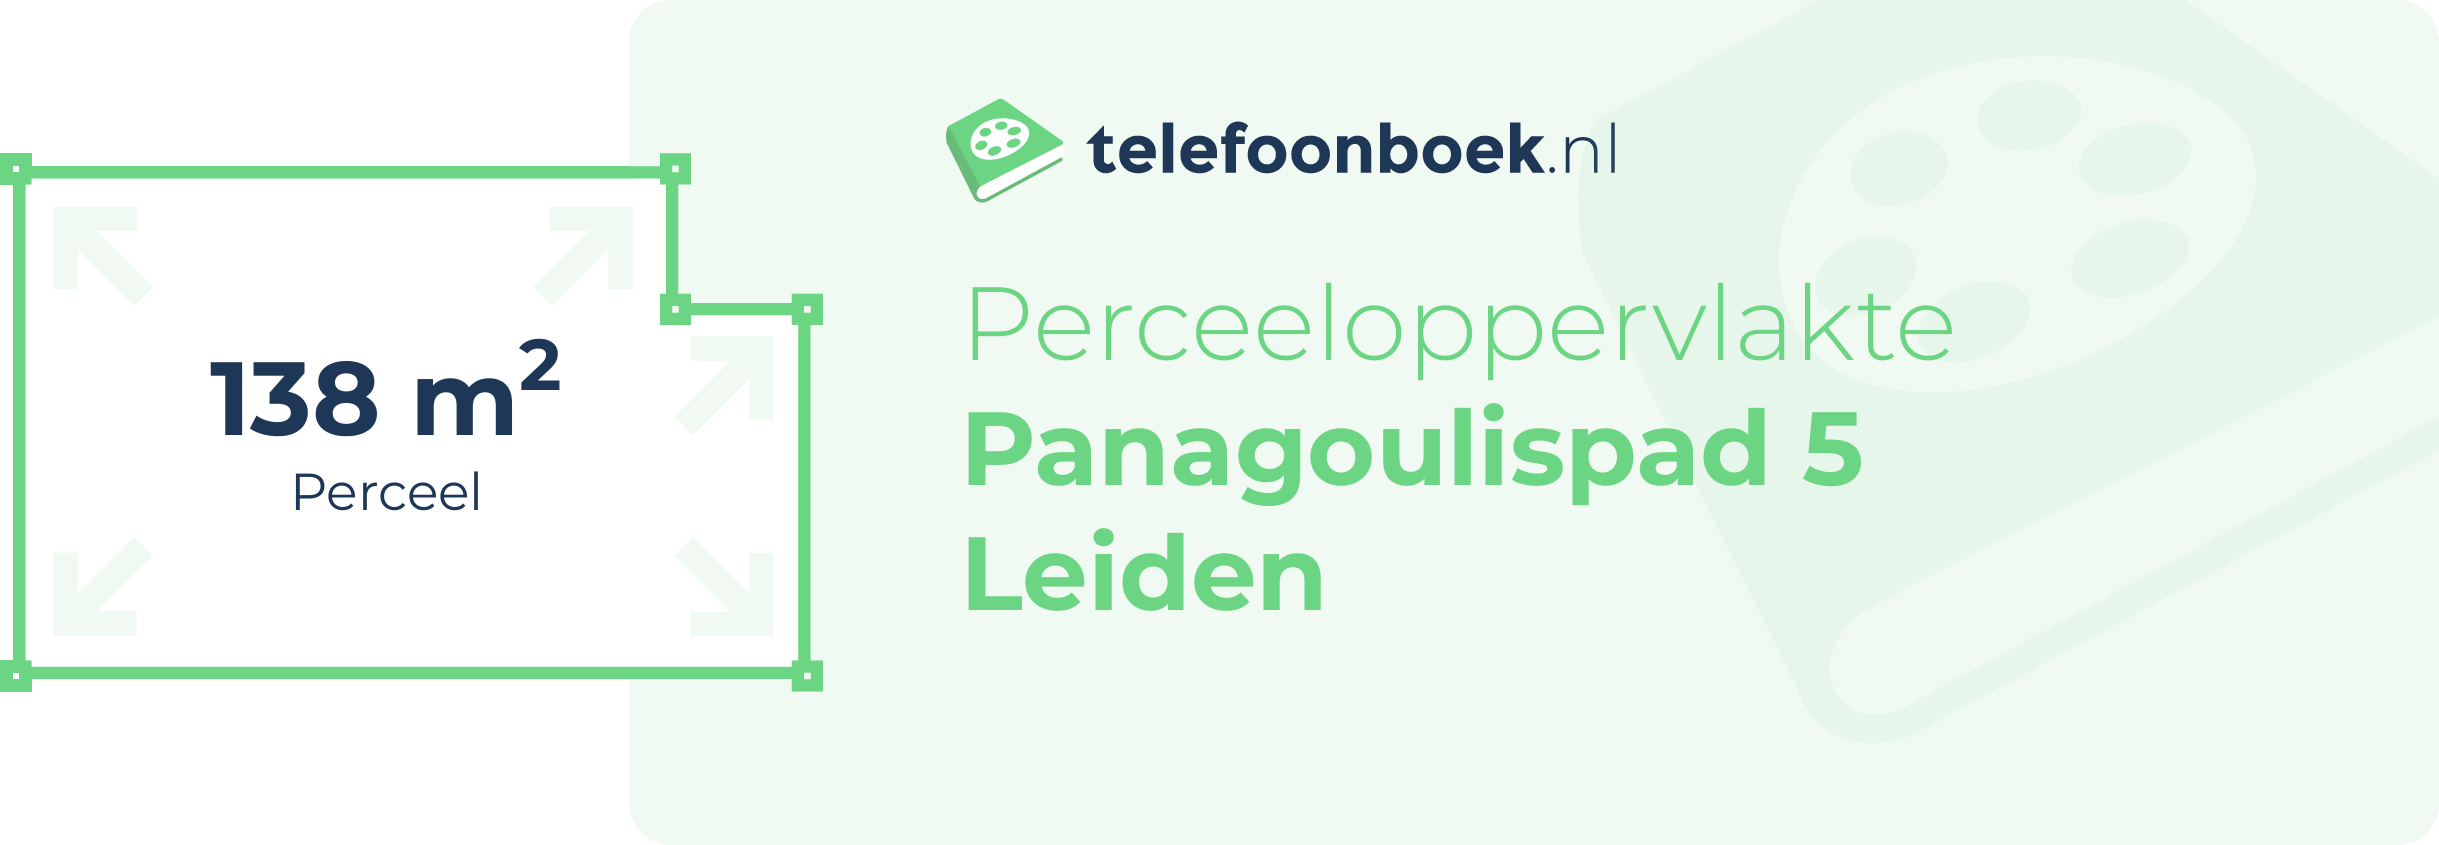 Perceeloppervlakte Panagoulispad 5 Leiden